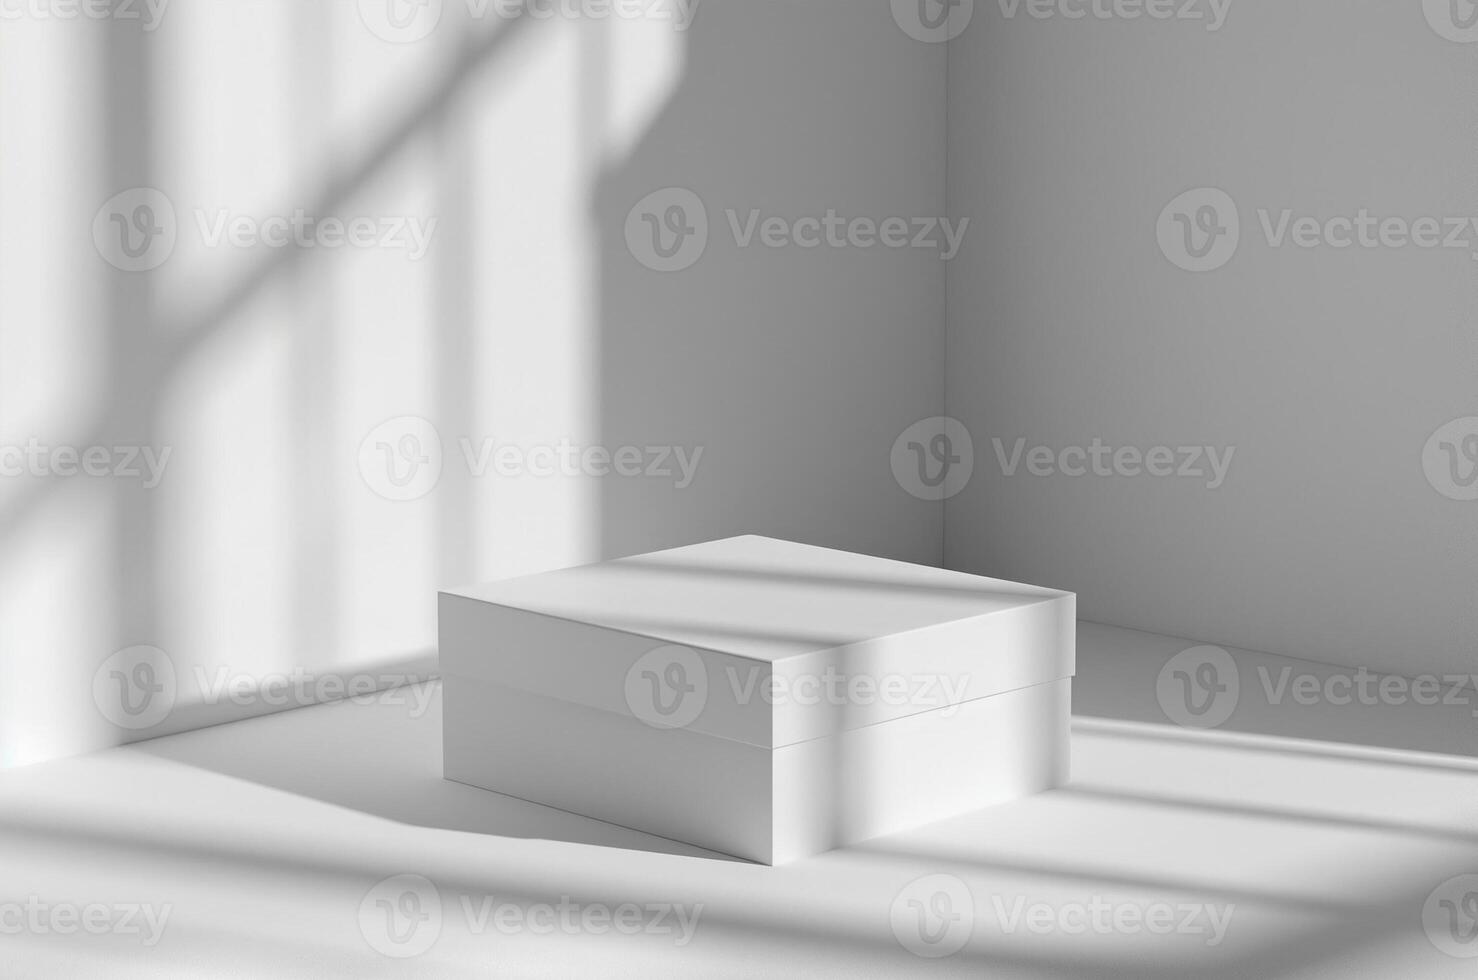 Mockup white box, window shadows photo